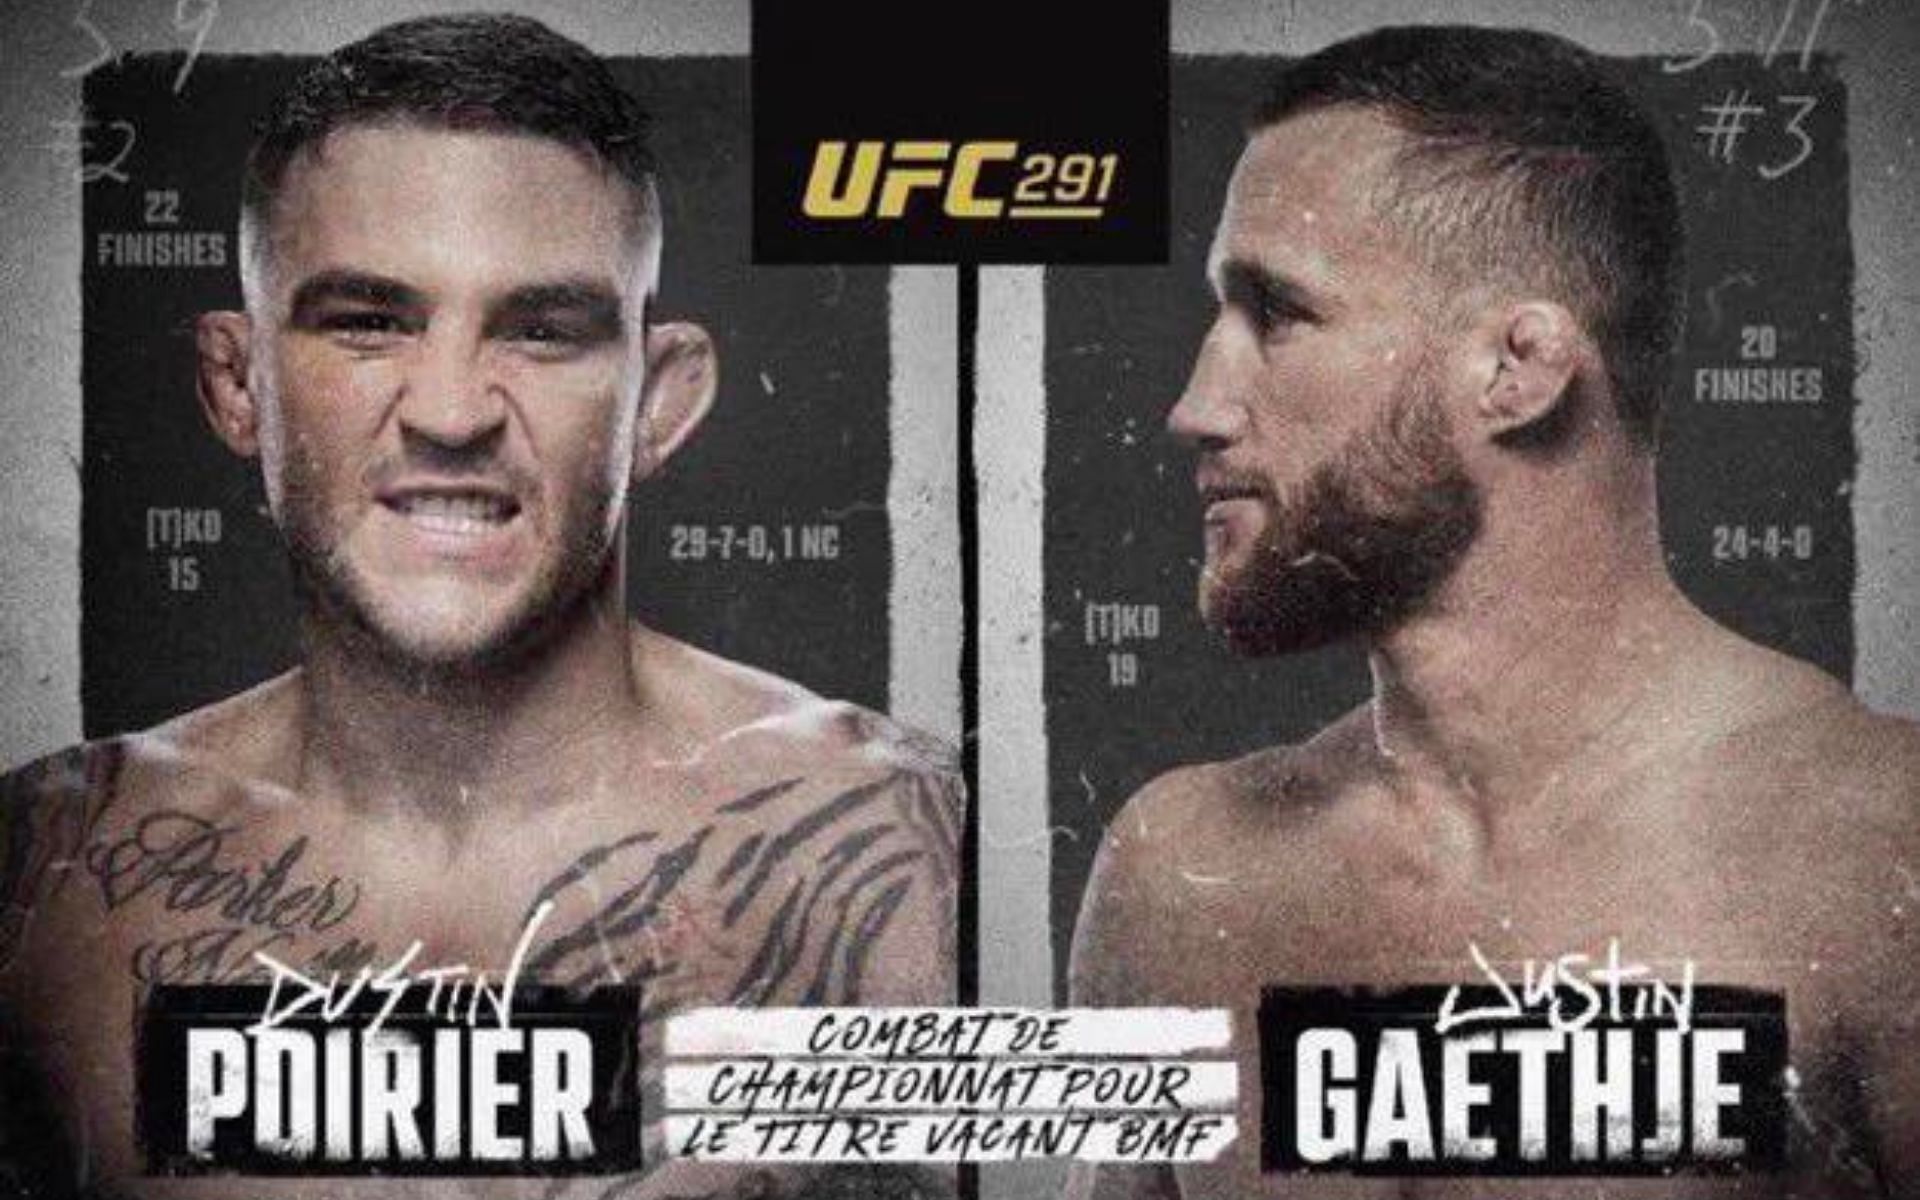 UFC 291: Dustin Poirier vs. Justin Gaethje poster [Image courtesy: @ufc on Twitter]